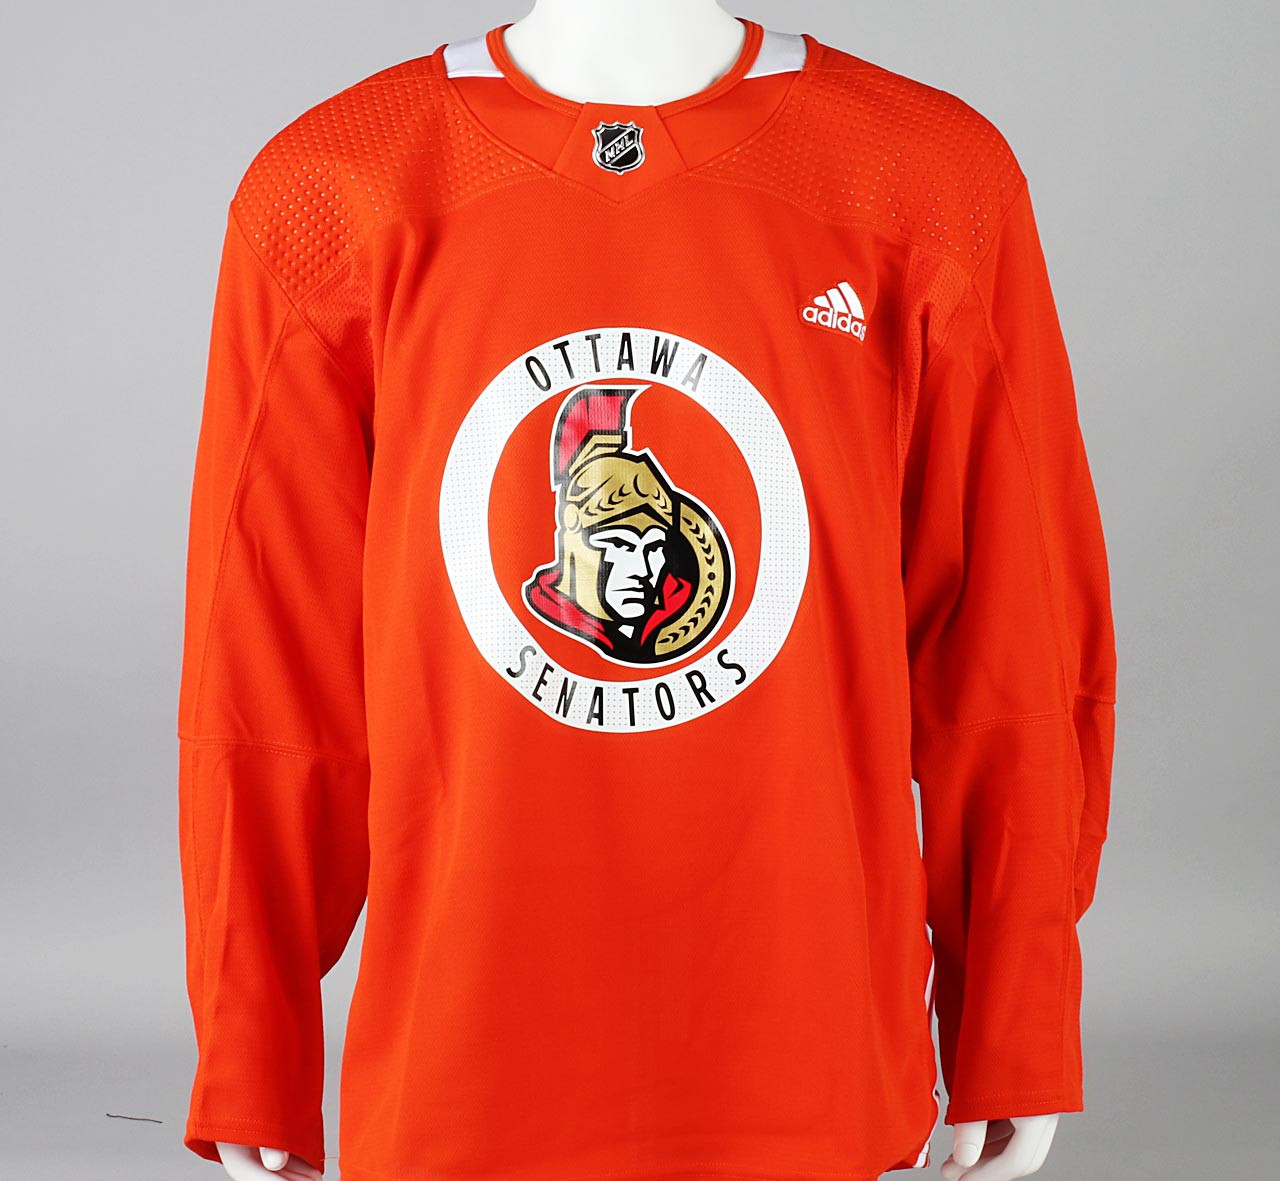 Practice Jersey - Ottawa Senators - Orange Adidas Size 58 - Pro Stock Hockey